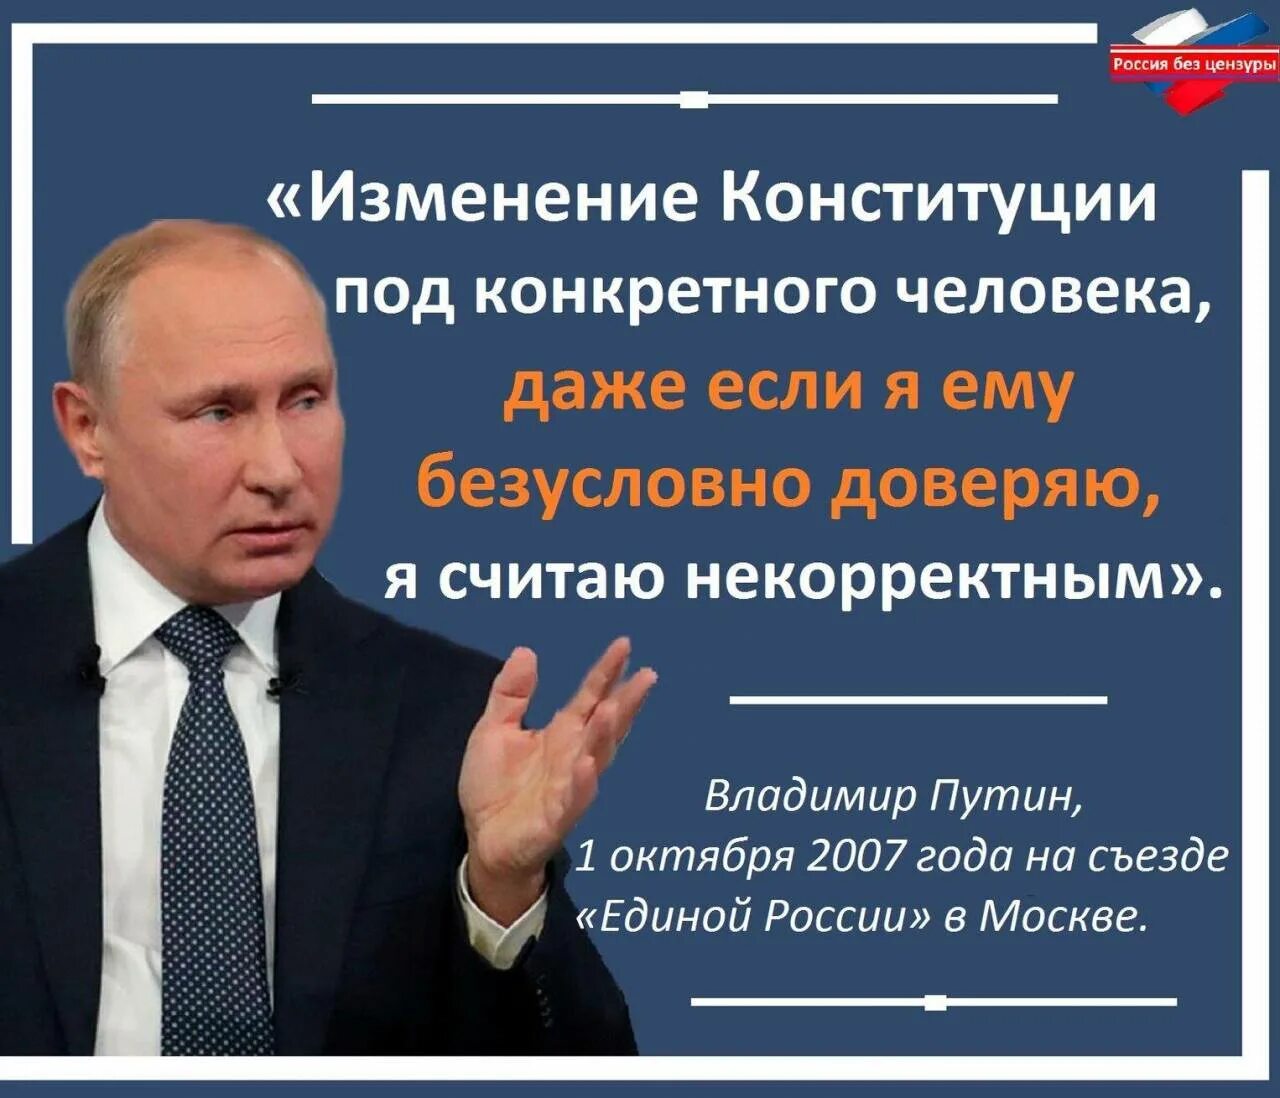 Цитата Путина про Конституцию. Законы против народа. Про изменения конституции